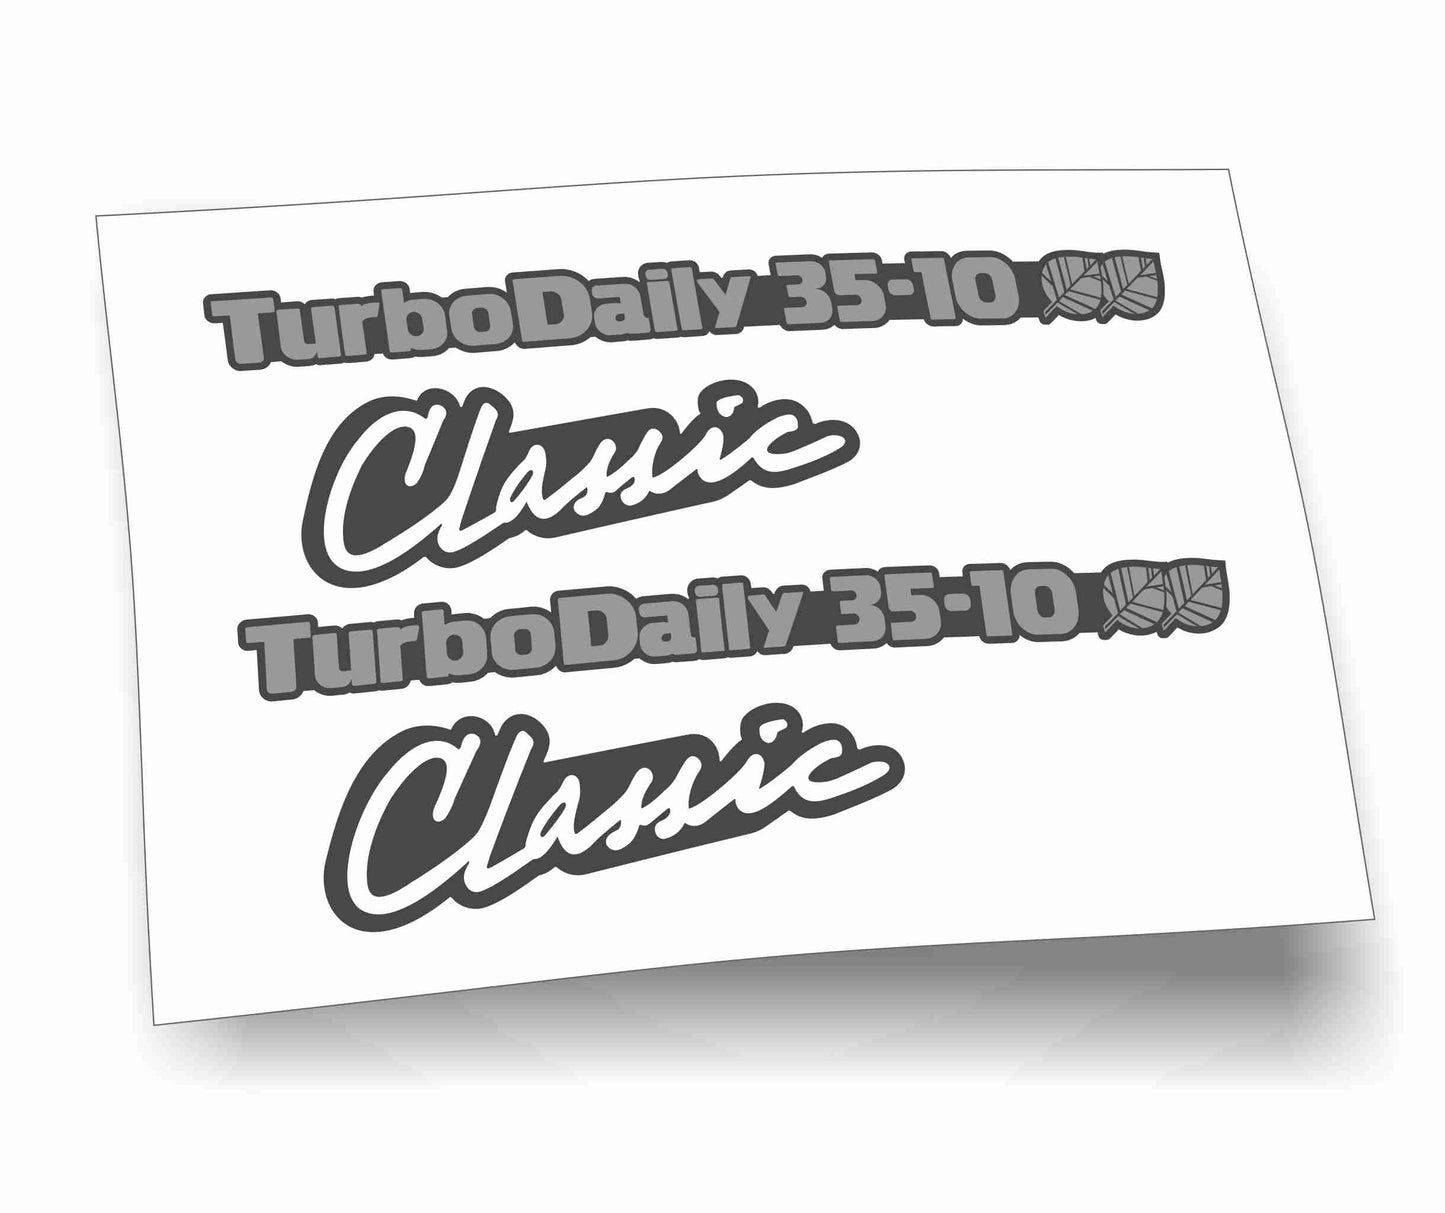 Adesivi iveco turbo daily 3510 classic